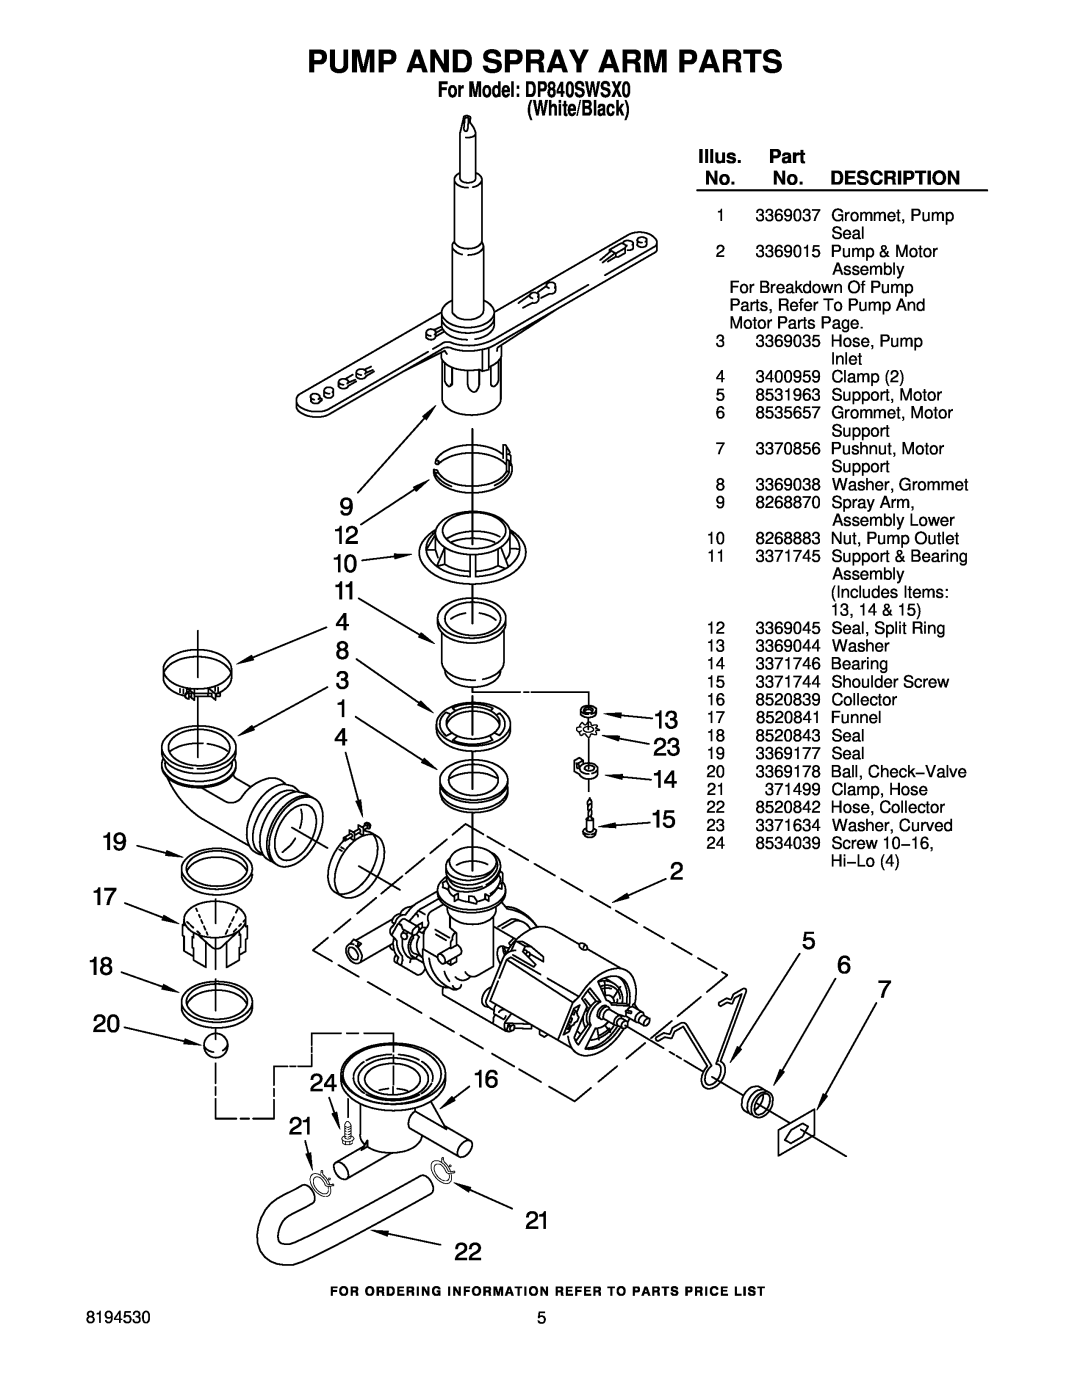 Whirlpool DP840SWSX0 manual Pump And Spray Arm Parts, Illus. Part No. No. DESCRIPTION 